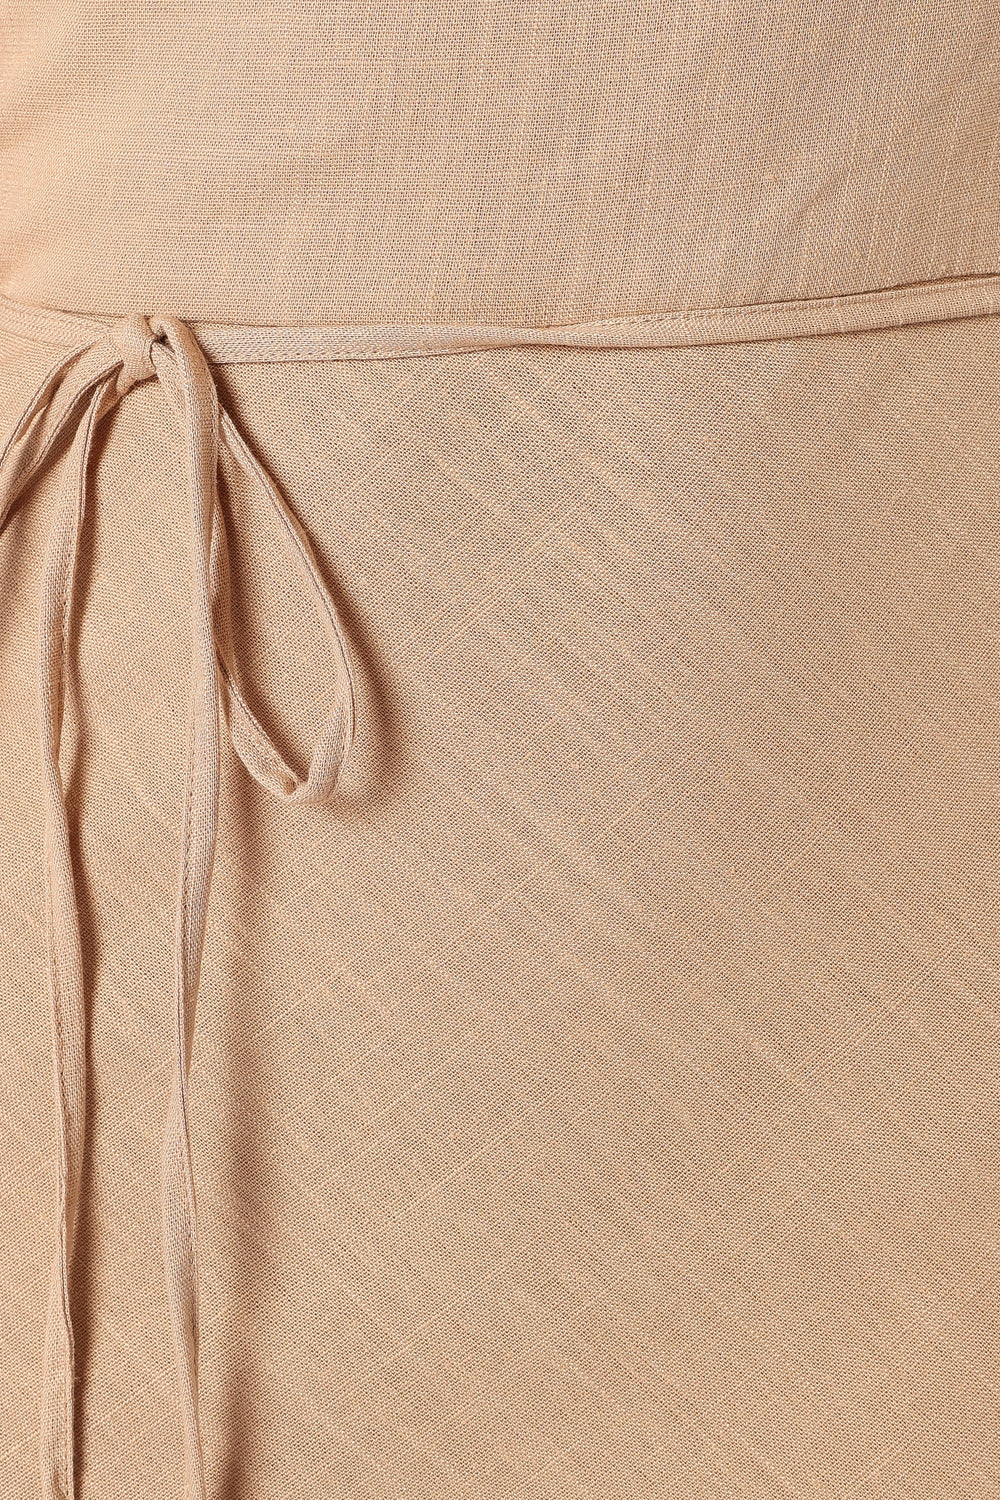 DRESSES @Calista One Shoulder Midi Dress - Sand